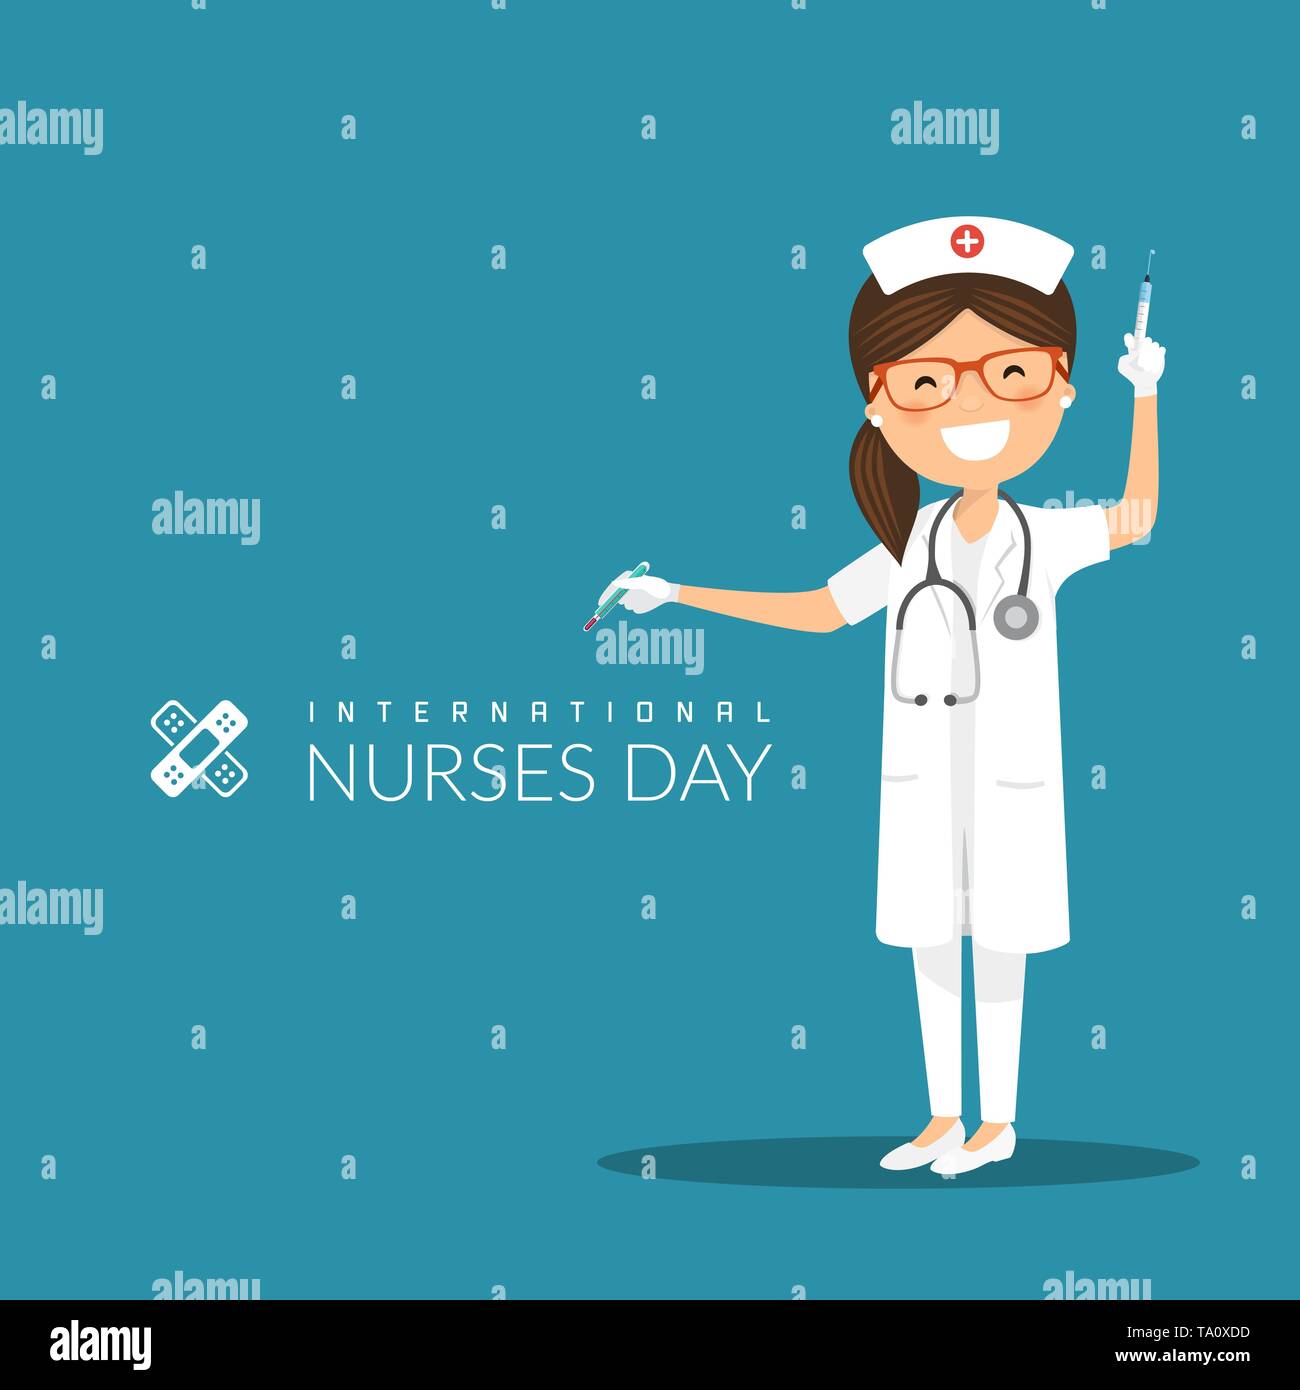 International nurses day on a blue background. Medicine vector illustration Stock Vector